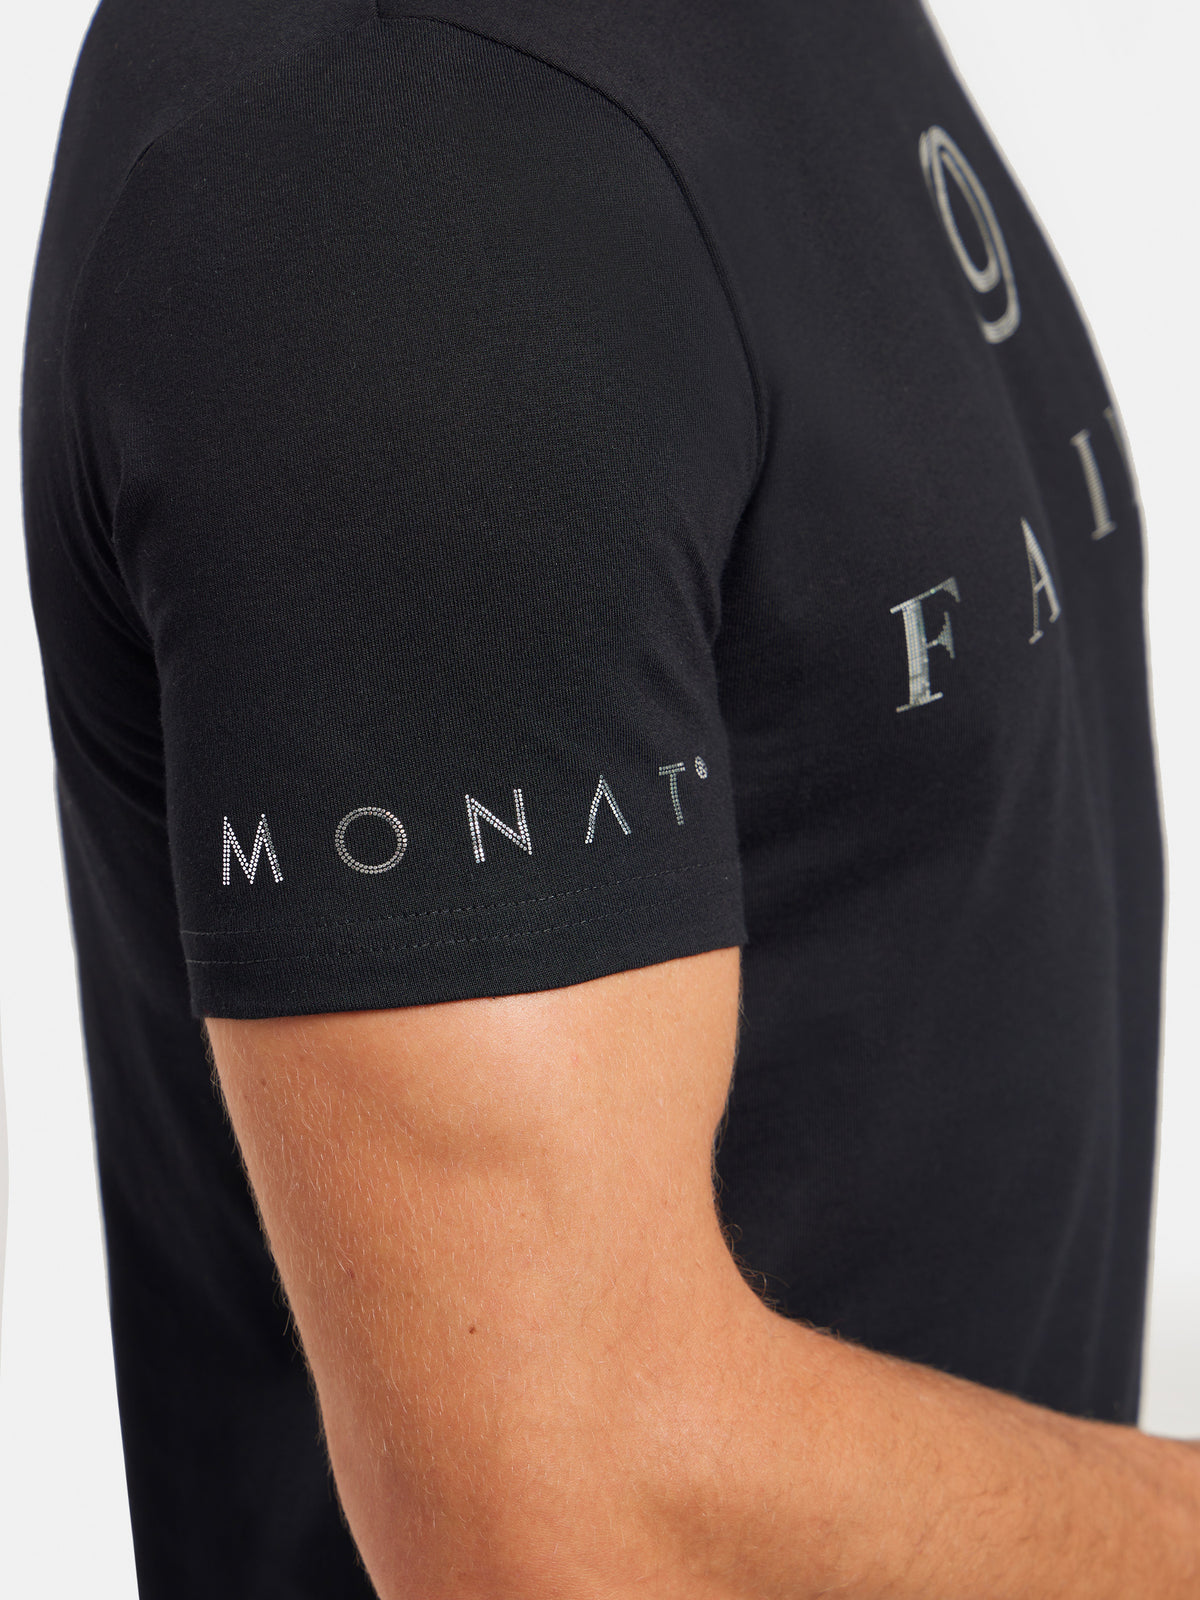 MONAT Mens Family Tee Shirt - Black